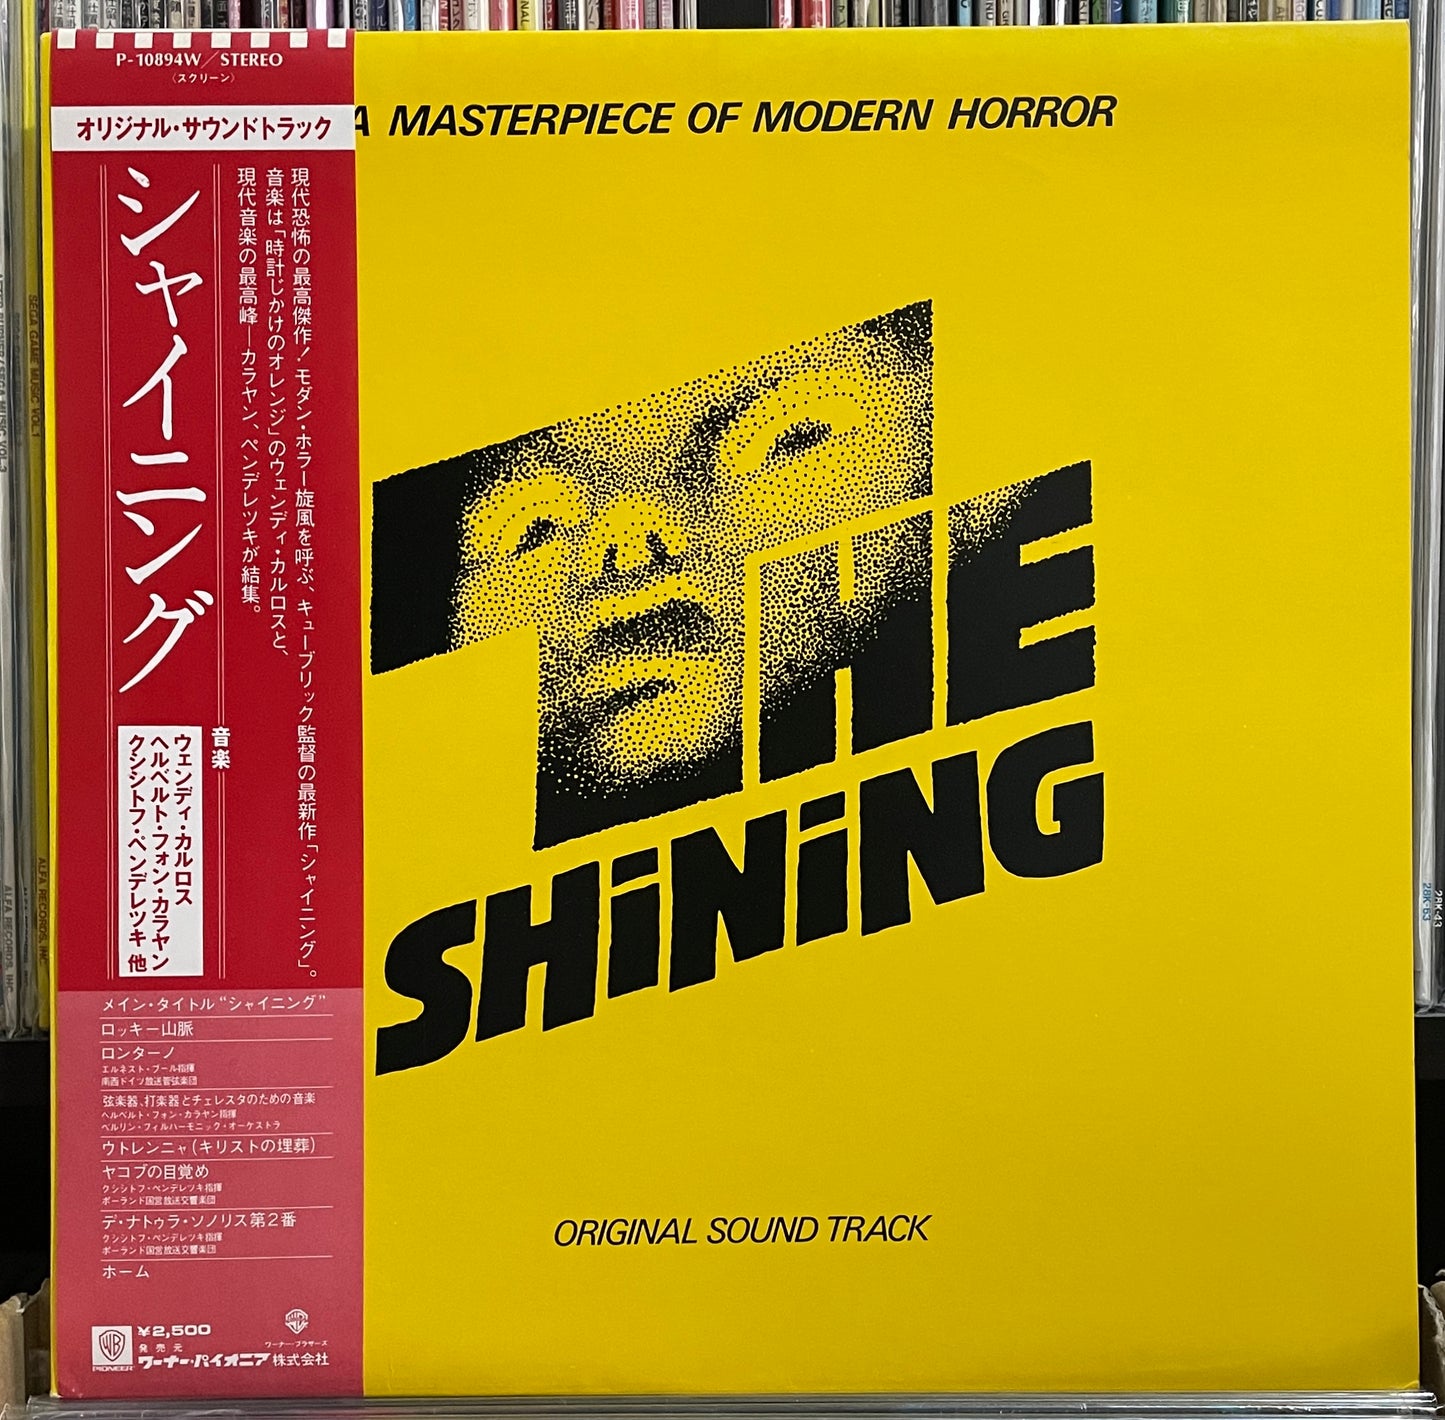 The Shining (1980) Japanese Press